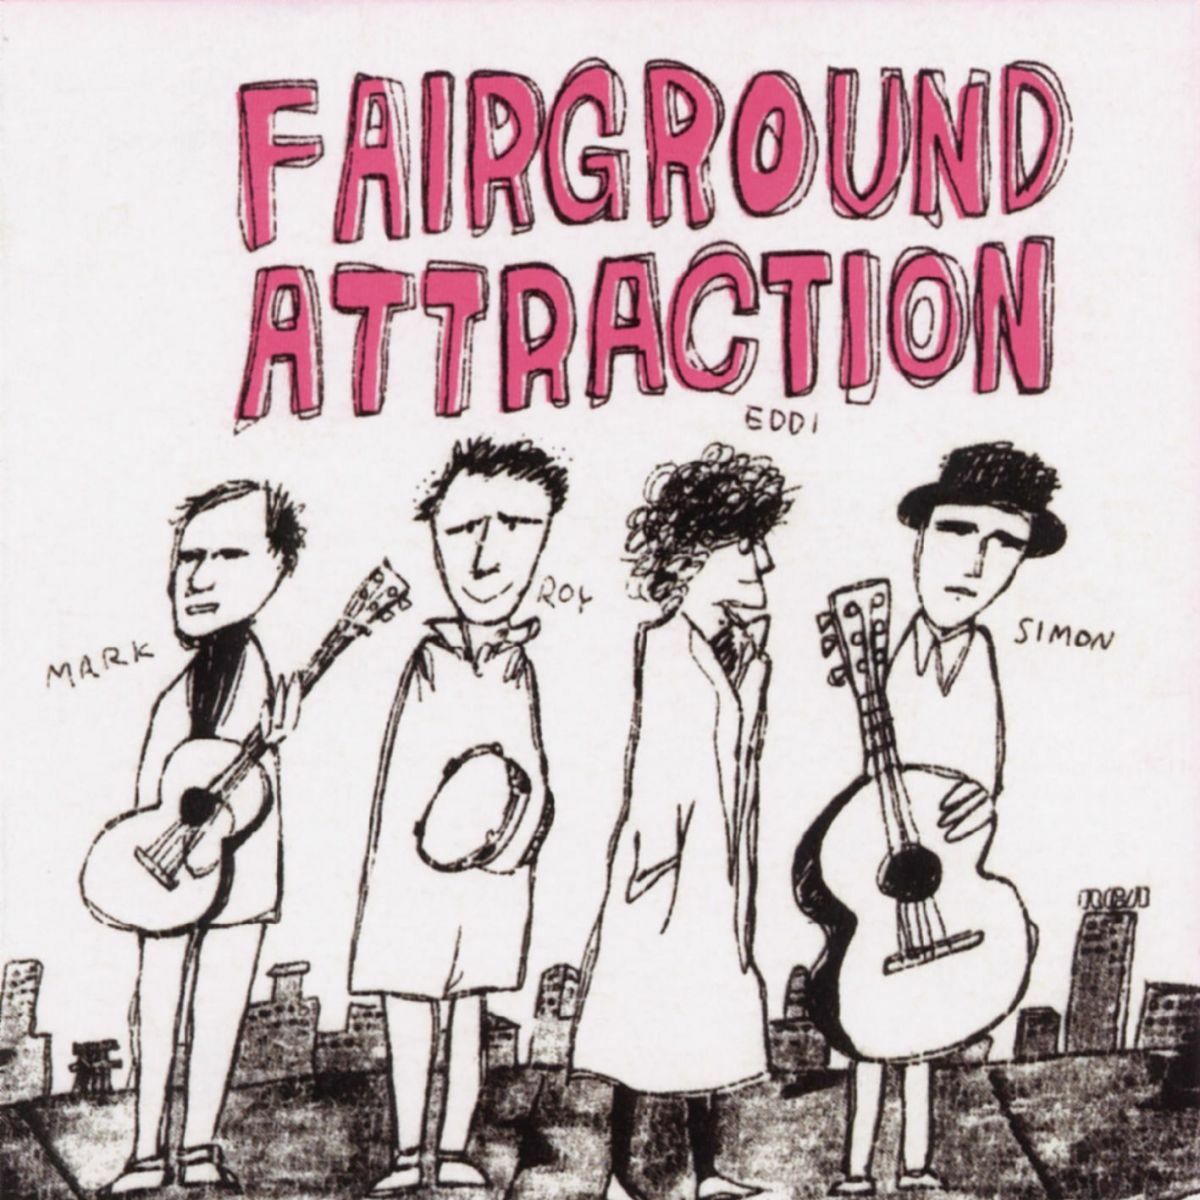 Fairground Attraction: albums, songs, playlists | Listen on Deezer